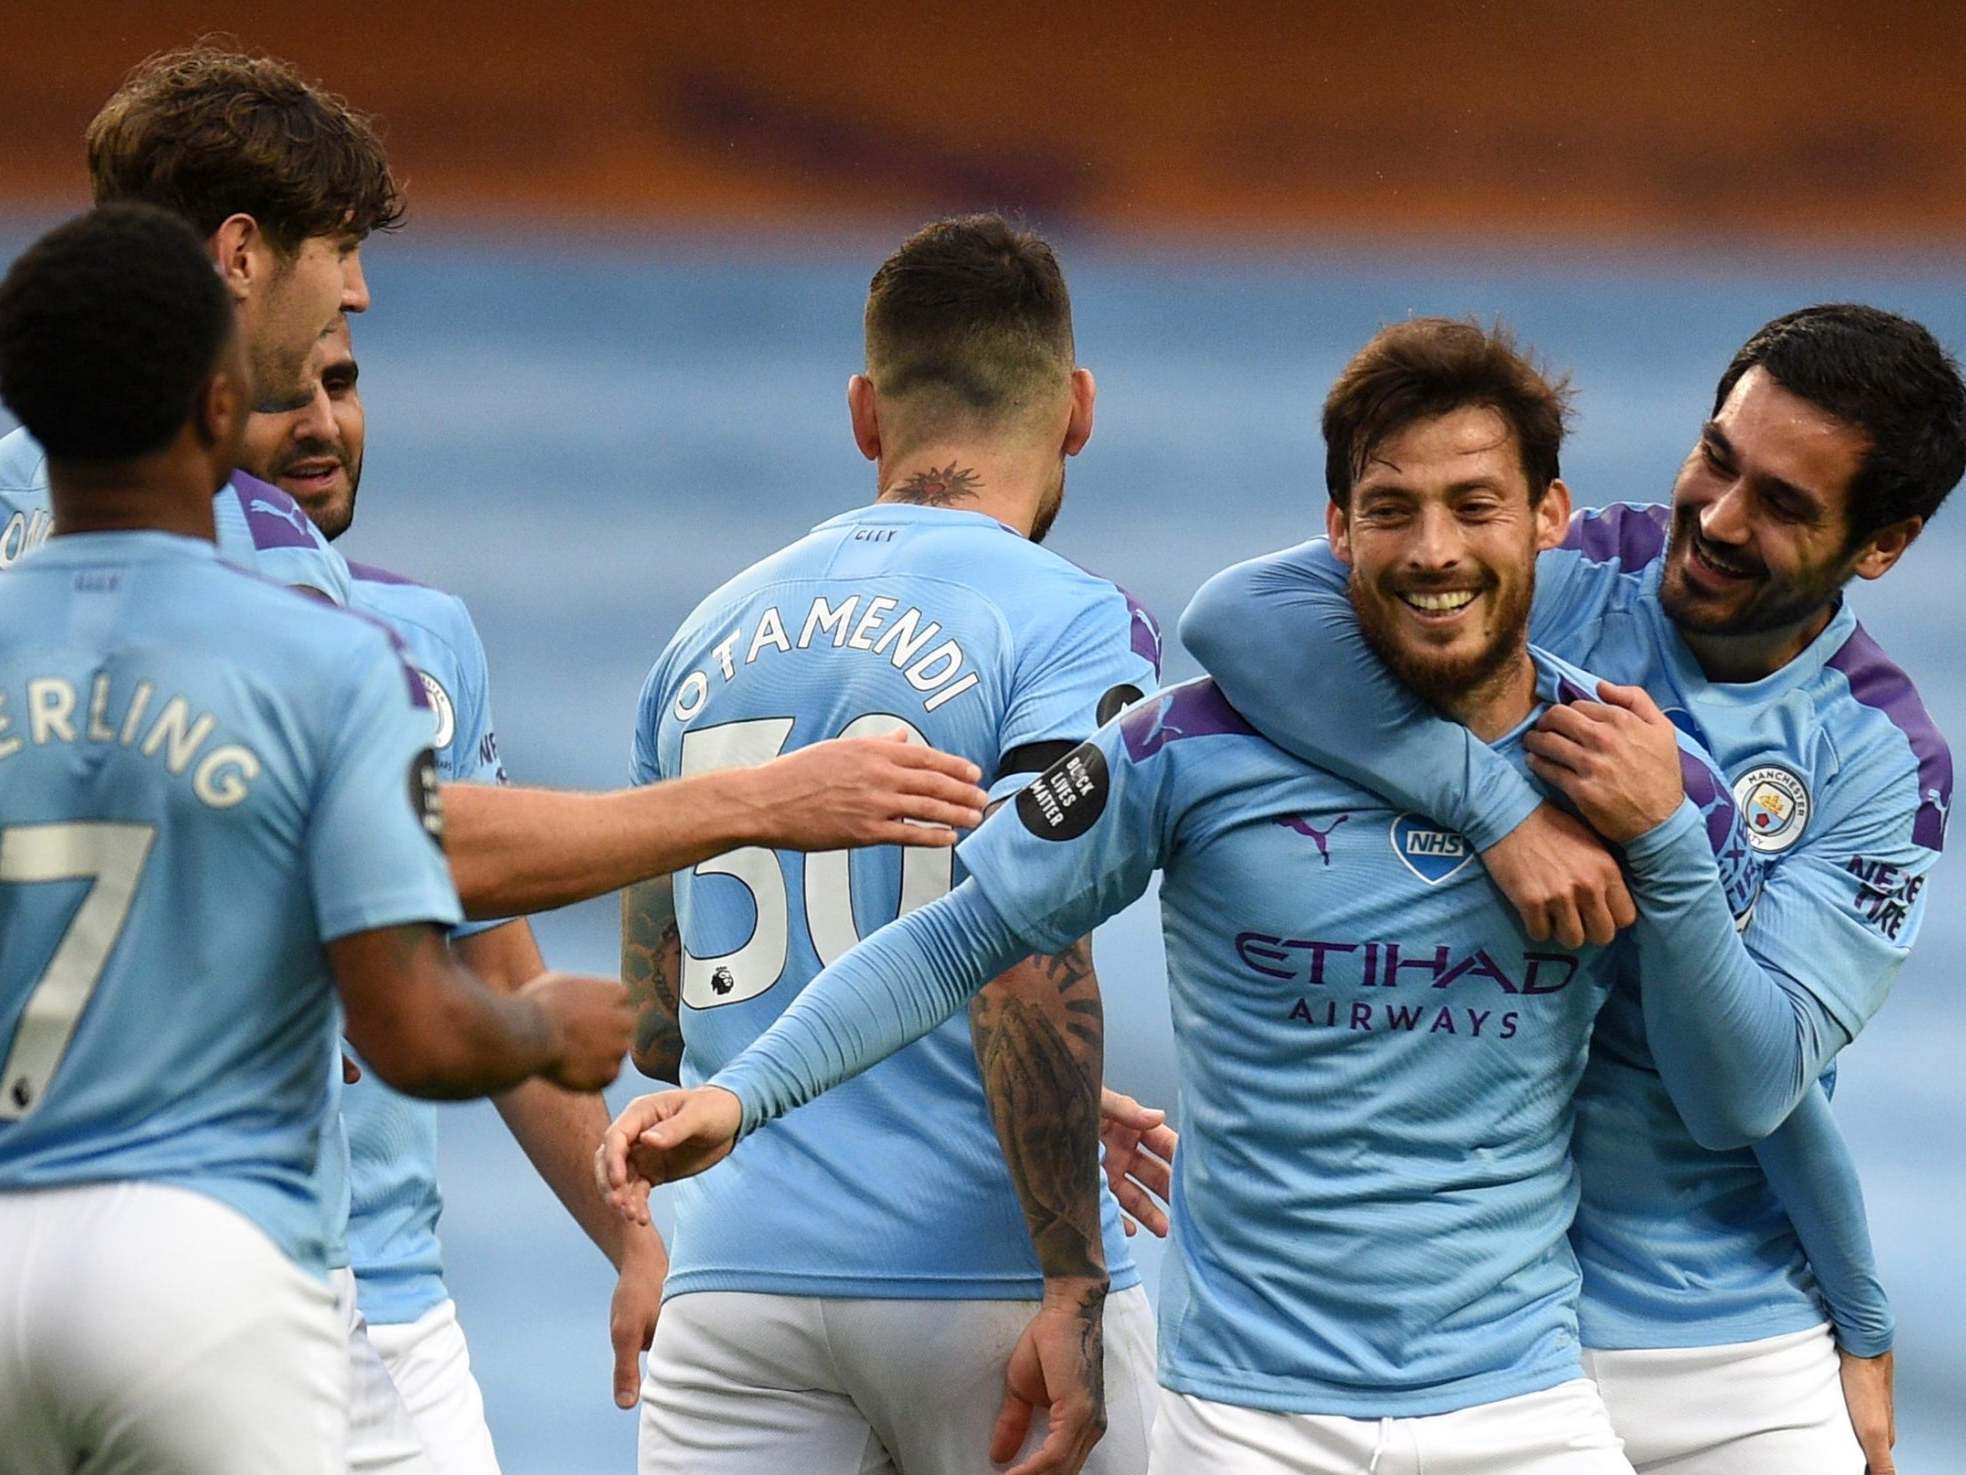 David Silva celebrates with teammates after scoring City's fourth